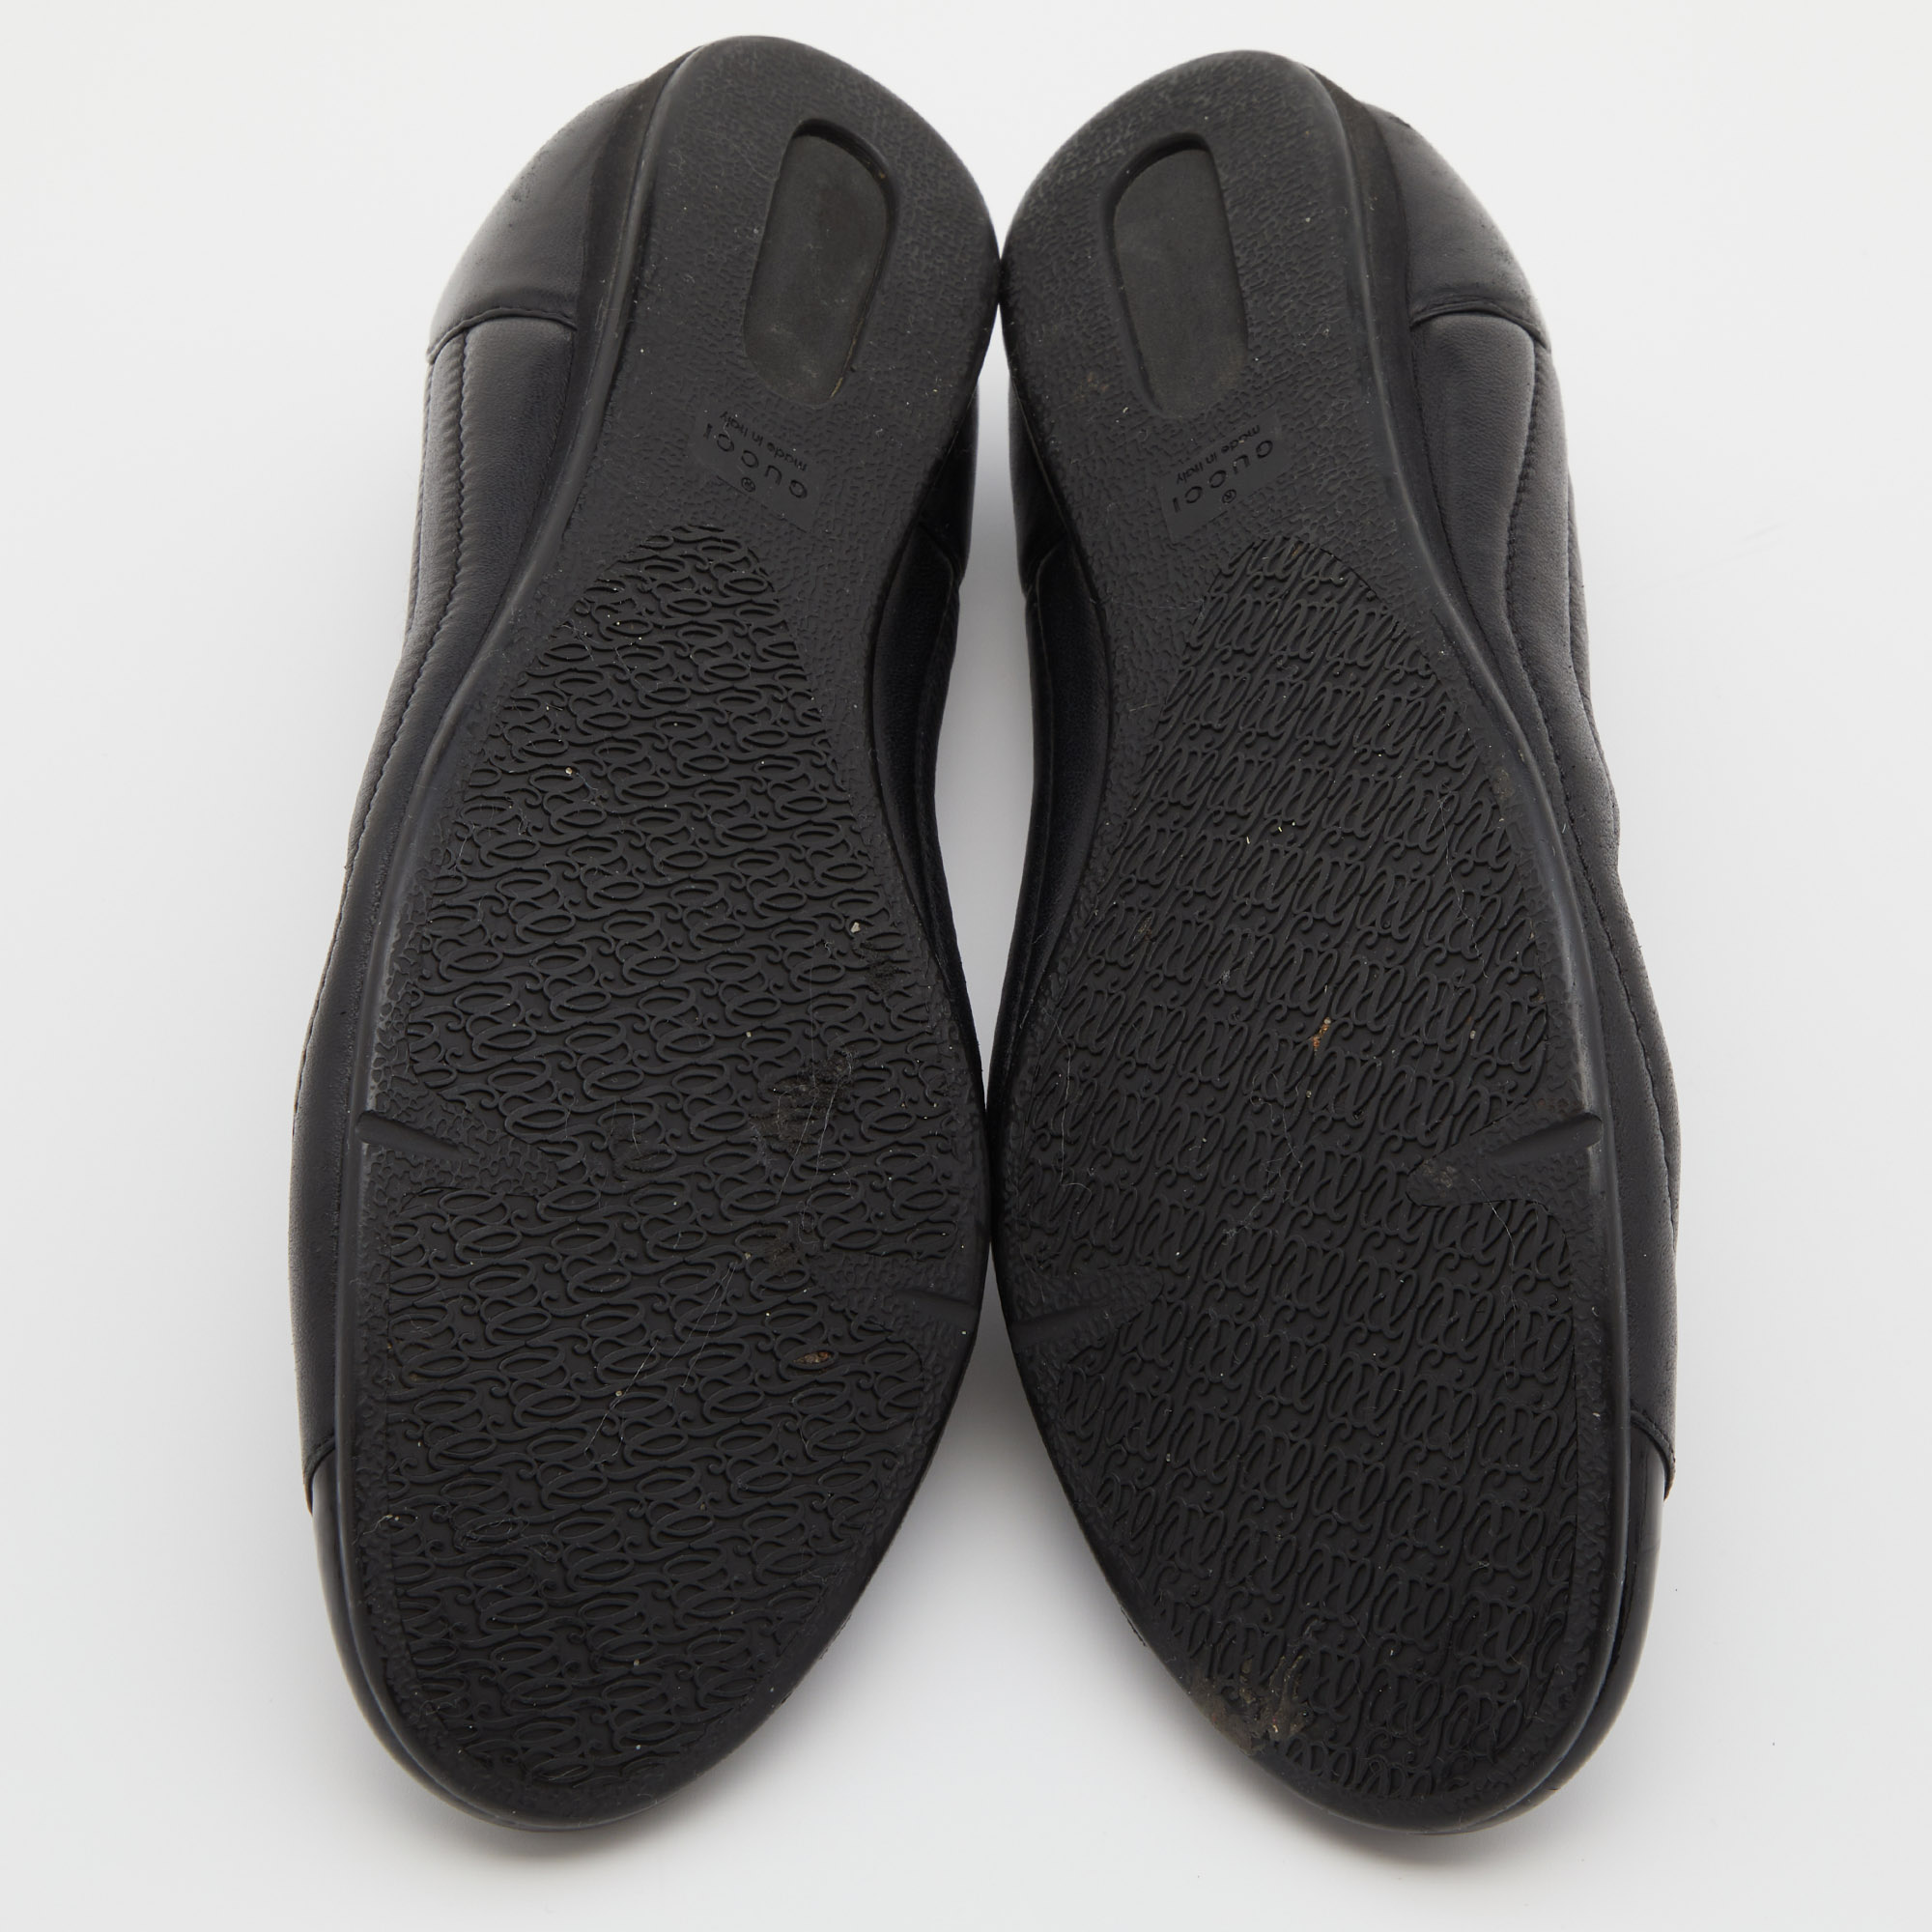 Gucci Black Leather Web Ballet Flats Size 40